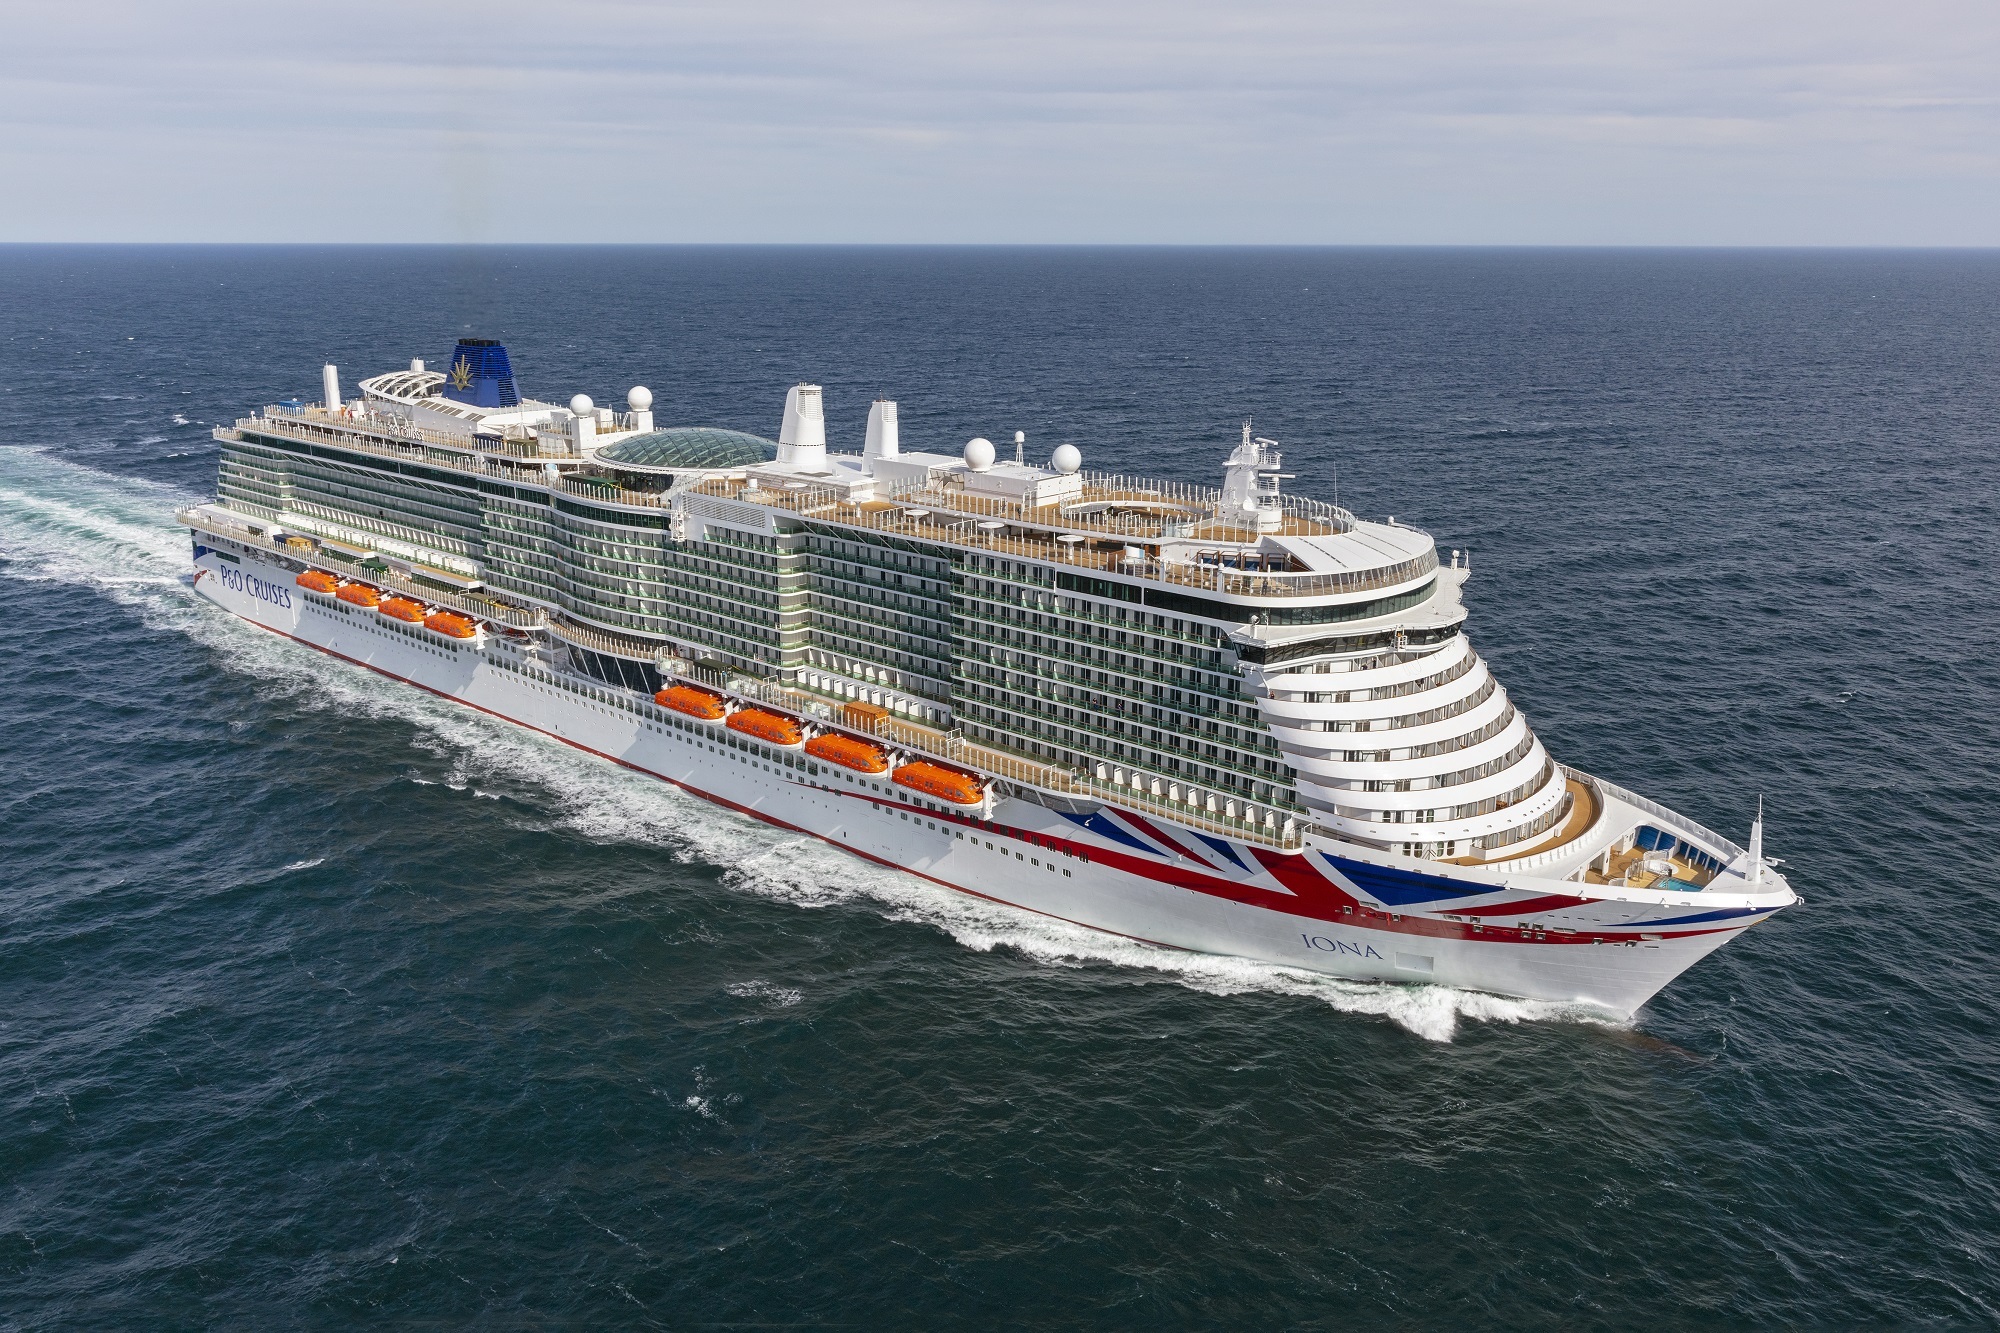 P&O Cruises’ LNG-powered cruise ship Iona sails maiden voyage